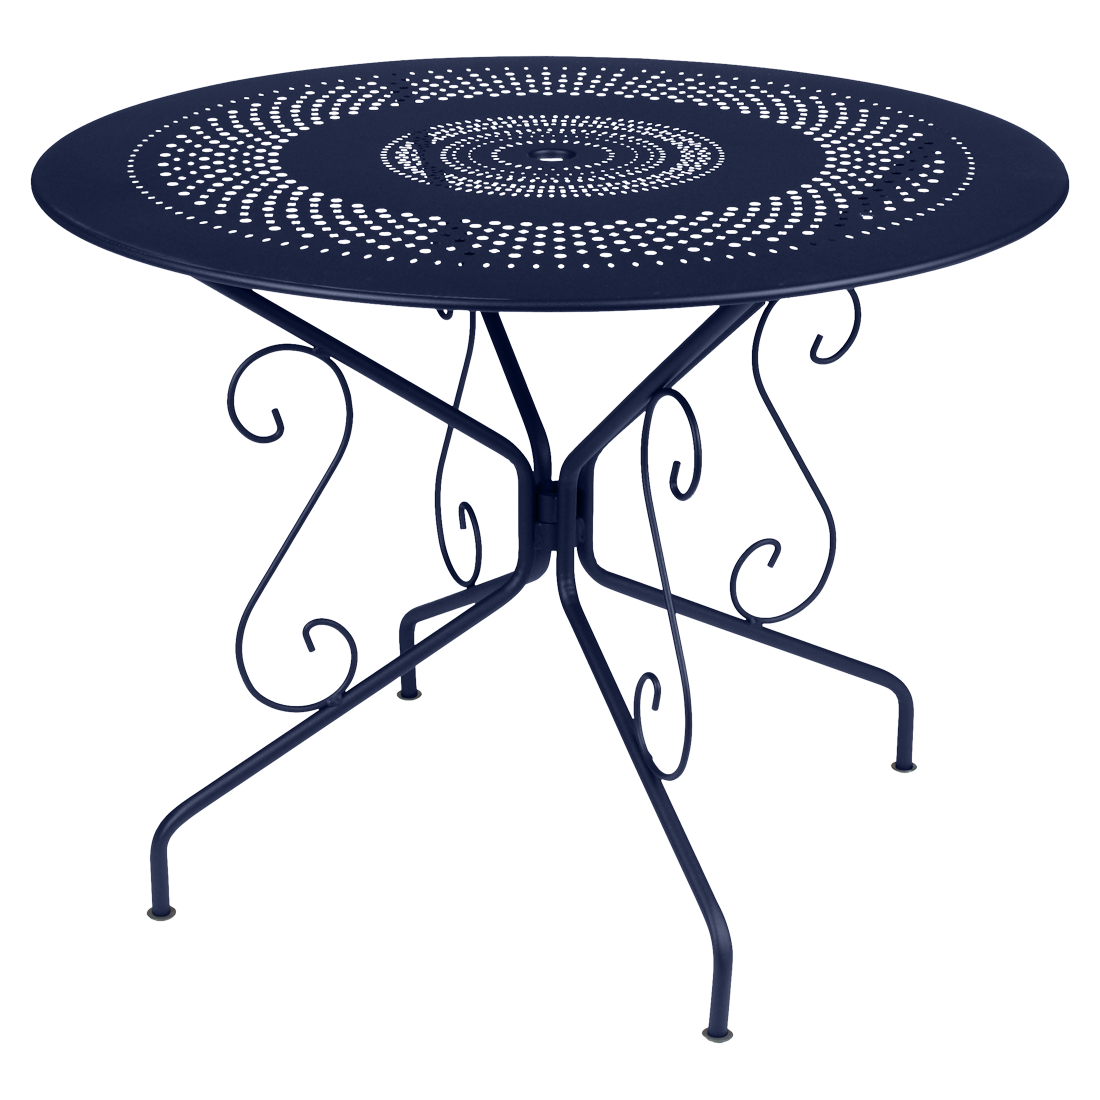 table de jardin, table metal, table ronde metal, table ronde bleu